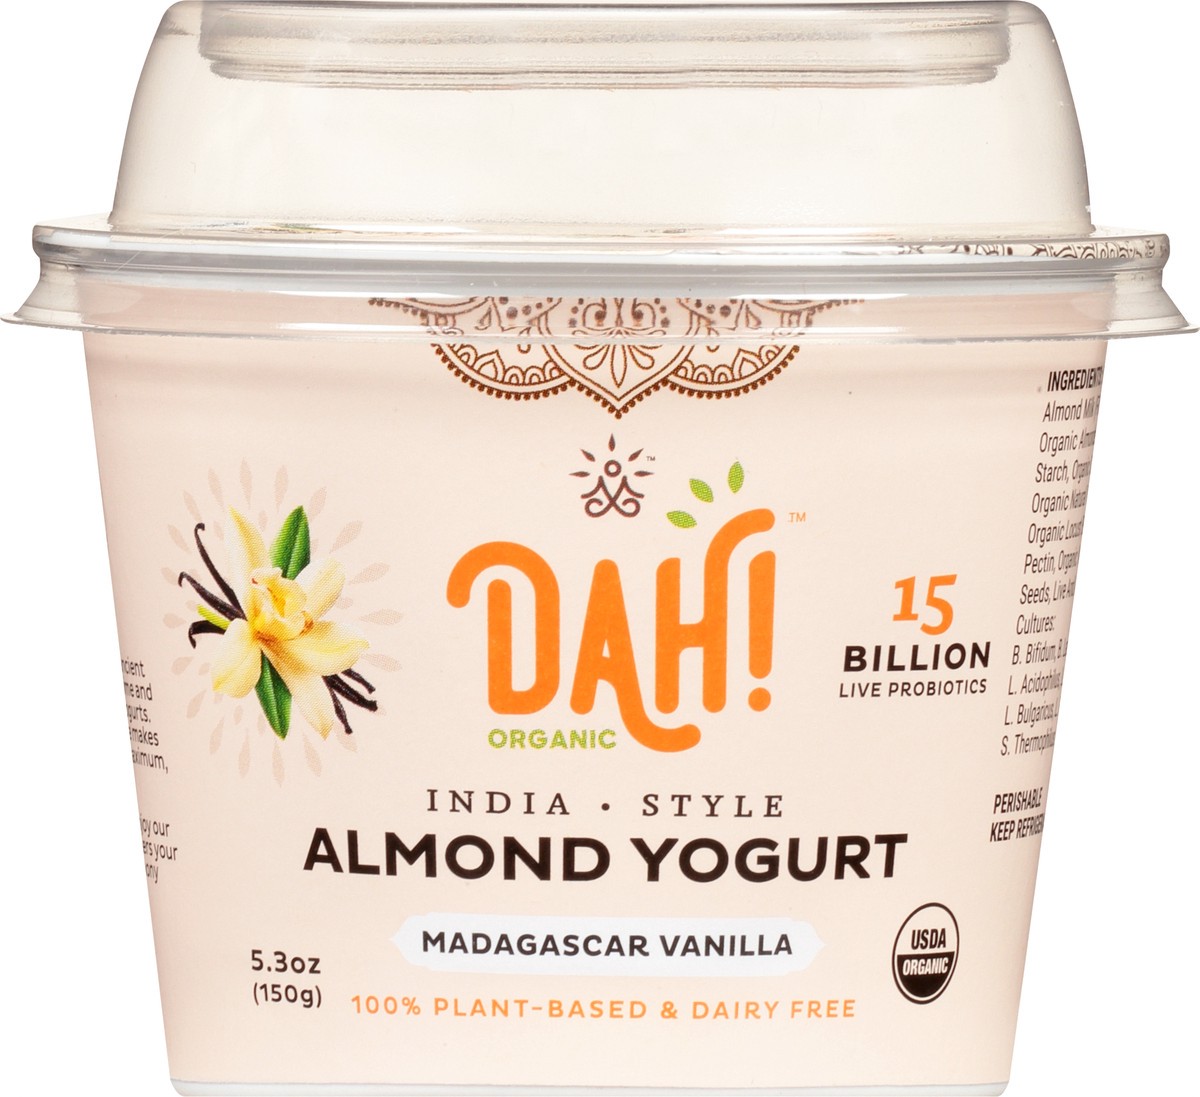 slide 6 of 13, Dahlicious Dah!™ organic almond yogurt, Madagascar vanilla, 5.3 oz